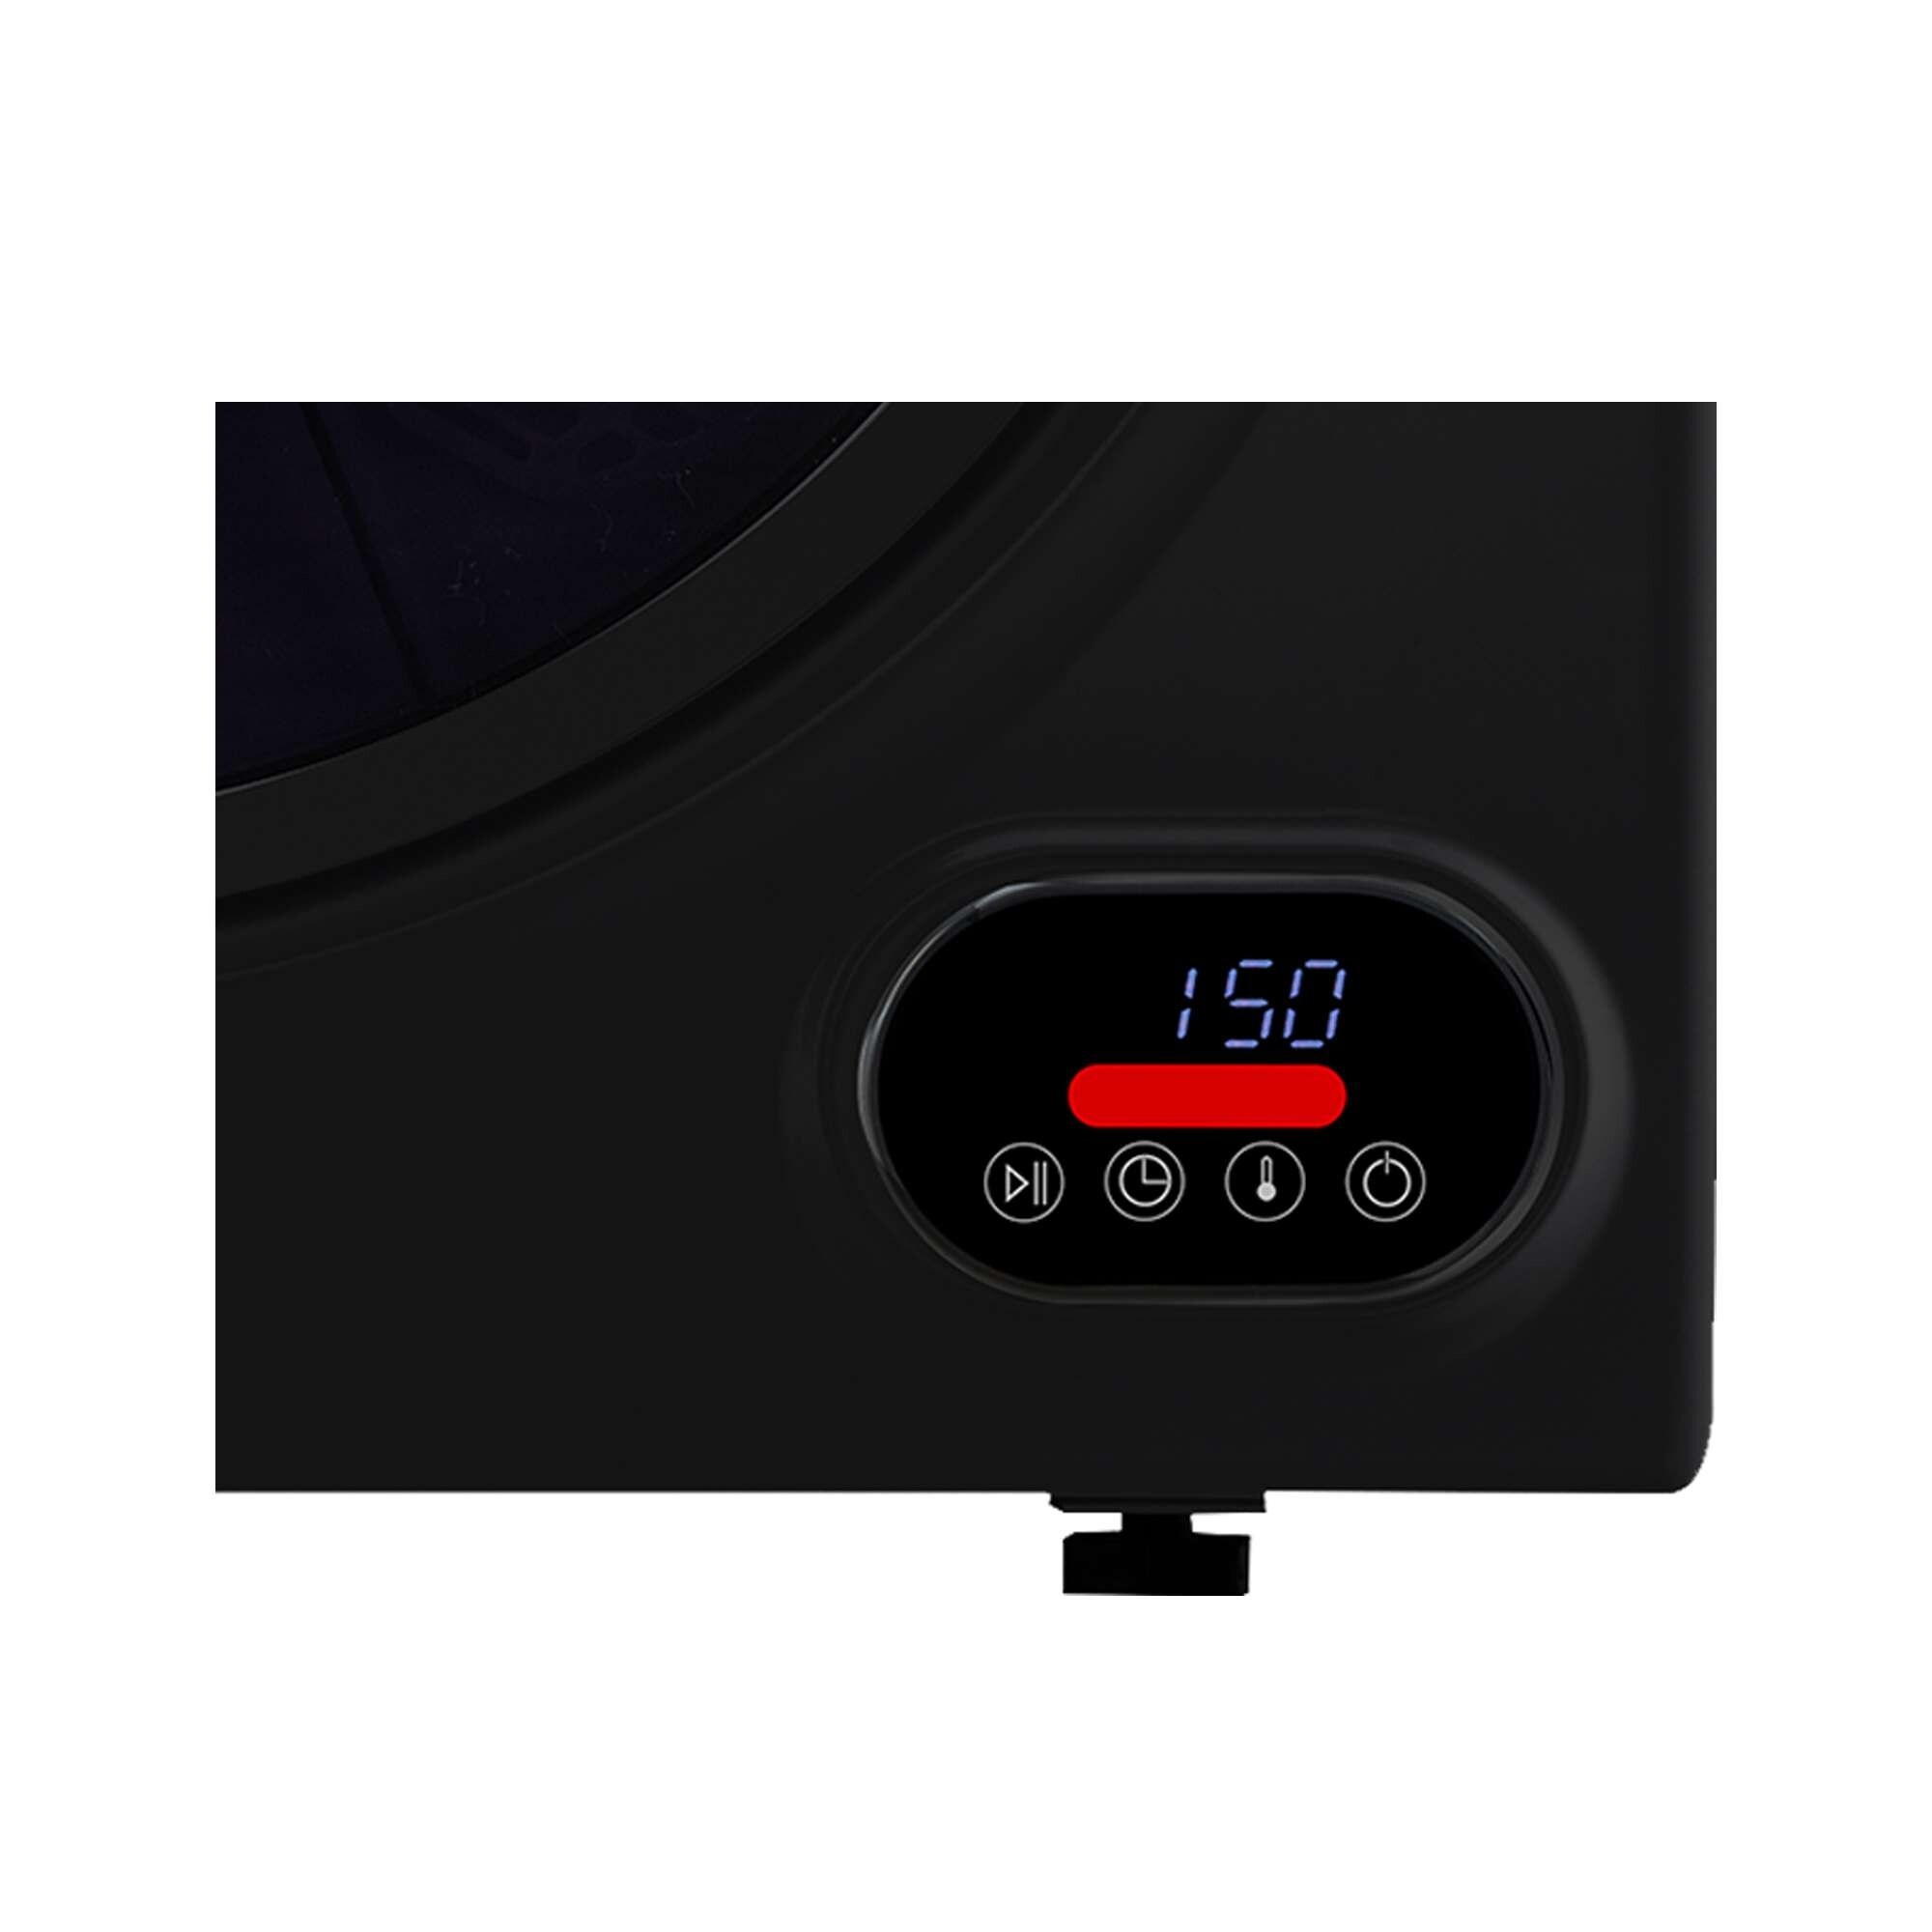 Equator 3.5 cu.ft. 110V Compact Digital Vented Sensor/Refresh Dryer in  White & Reviews